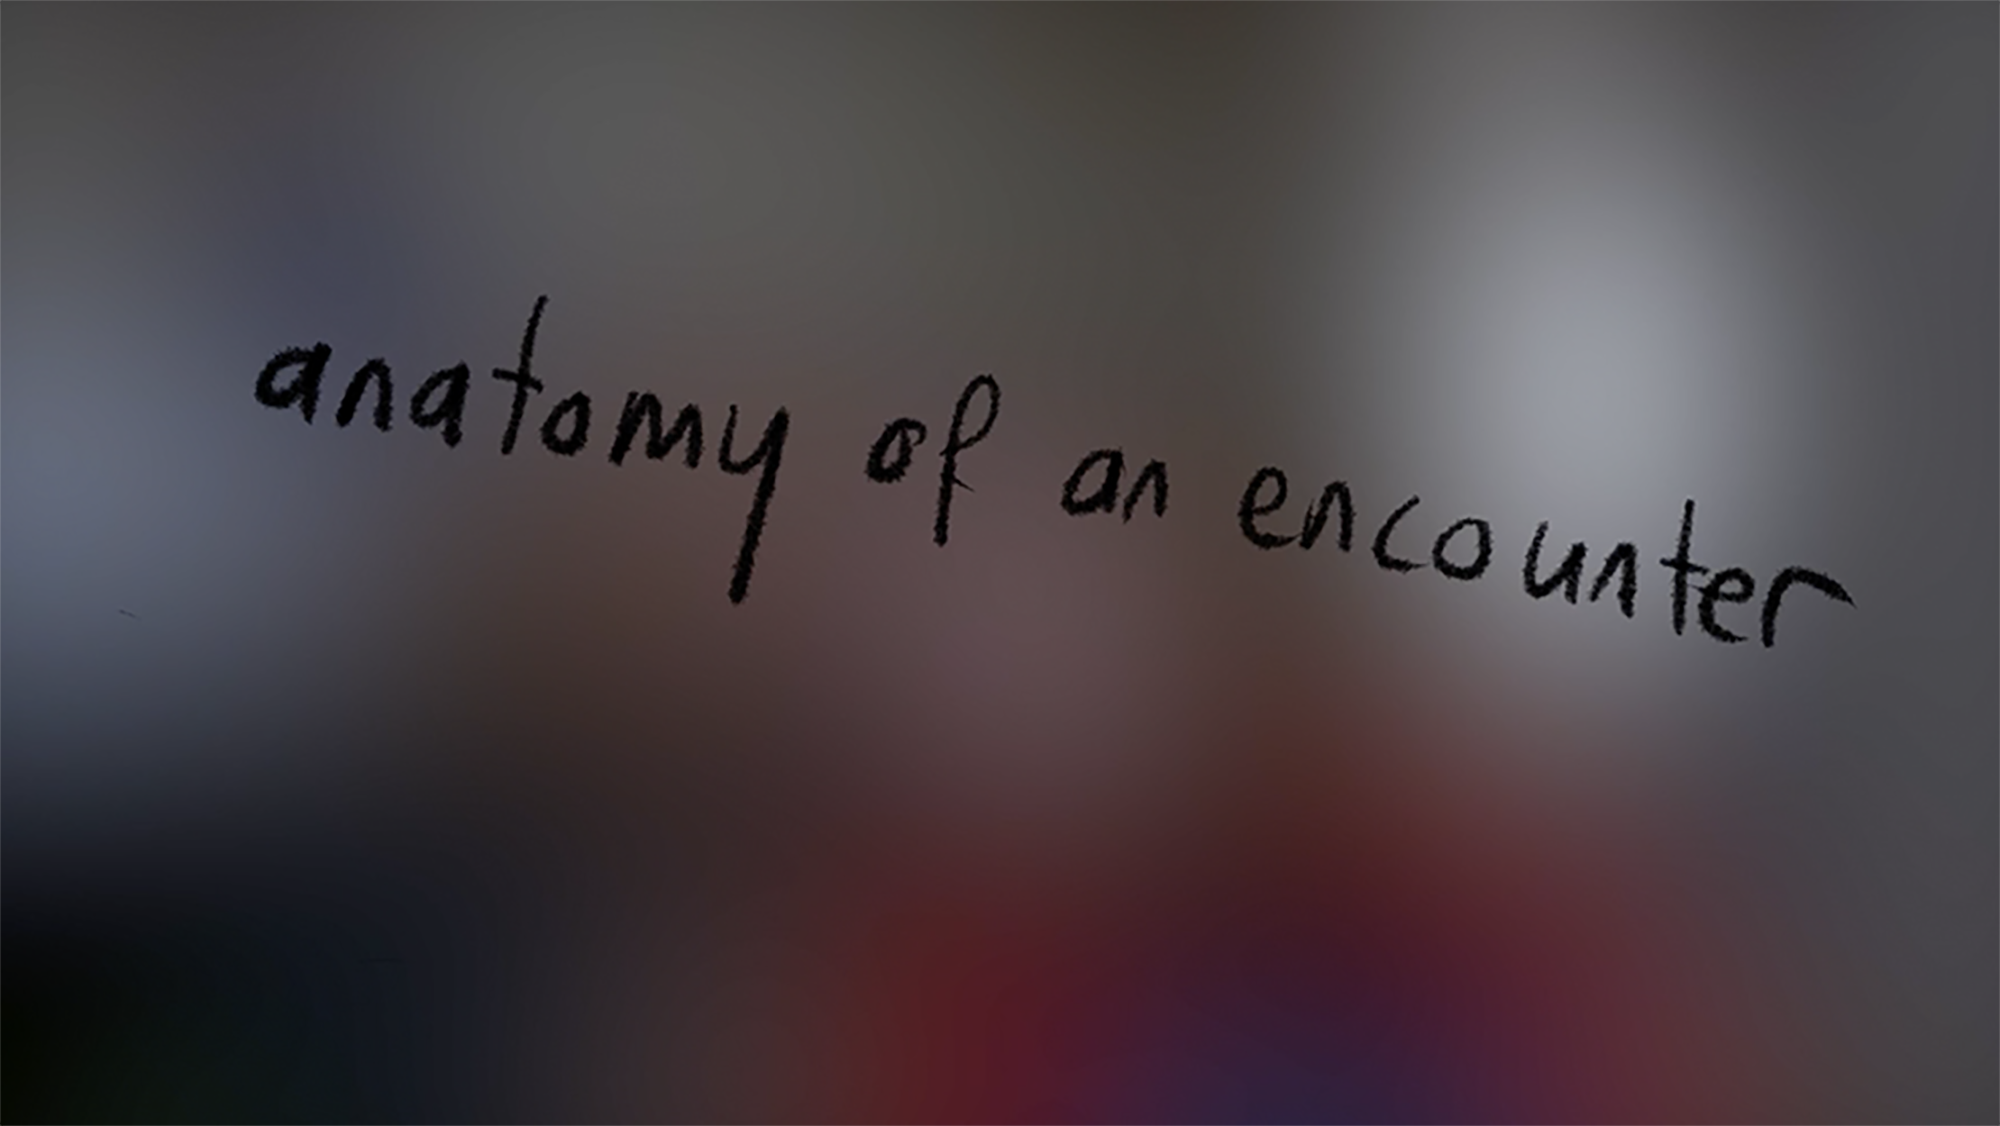 Anatomy of an encounter